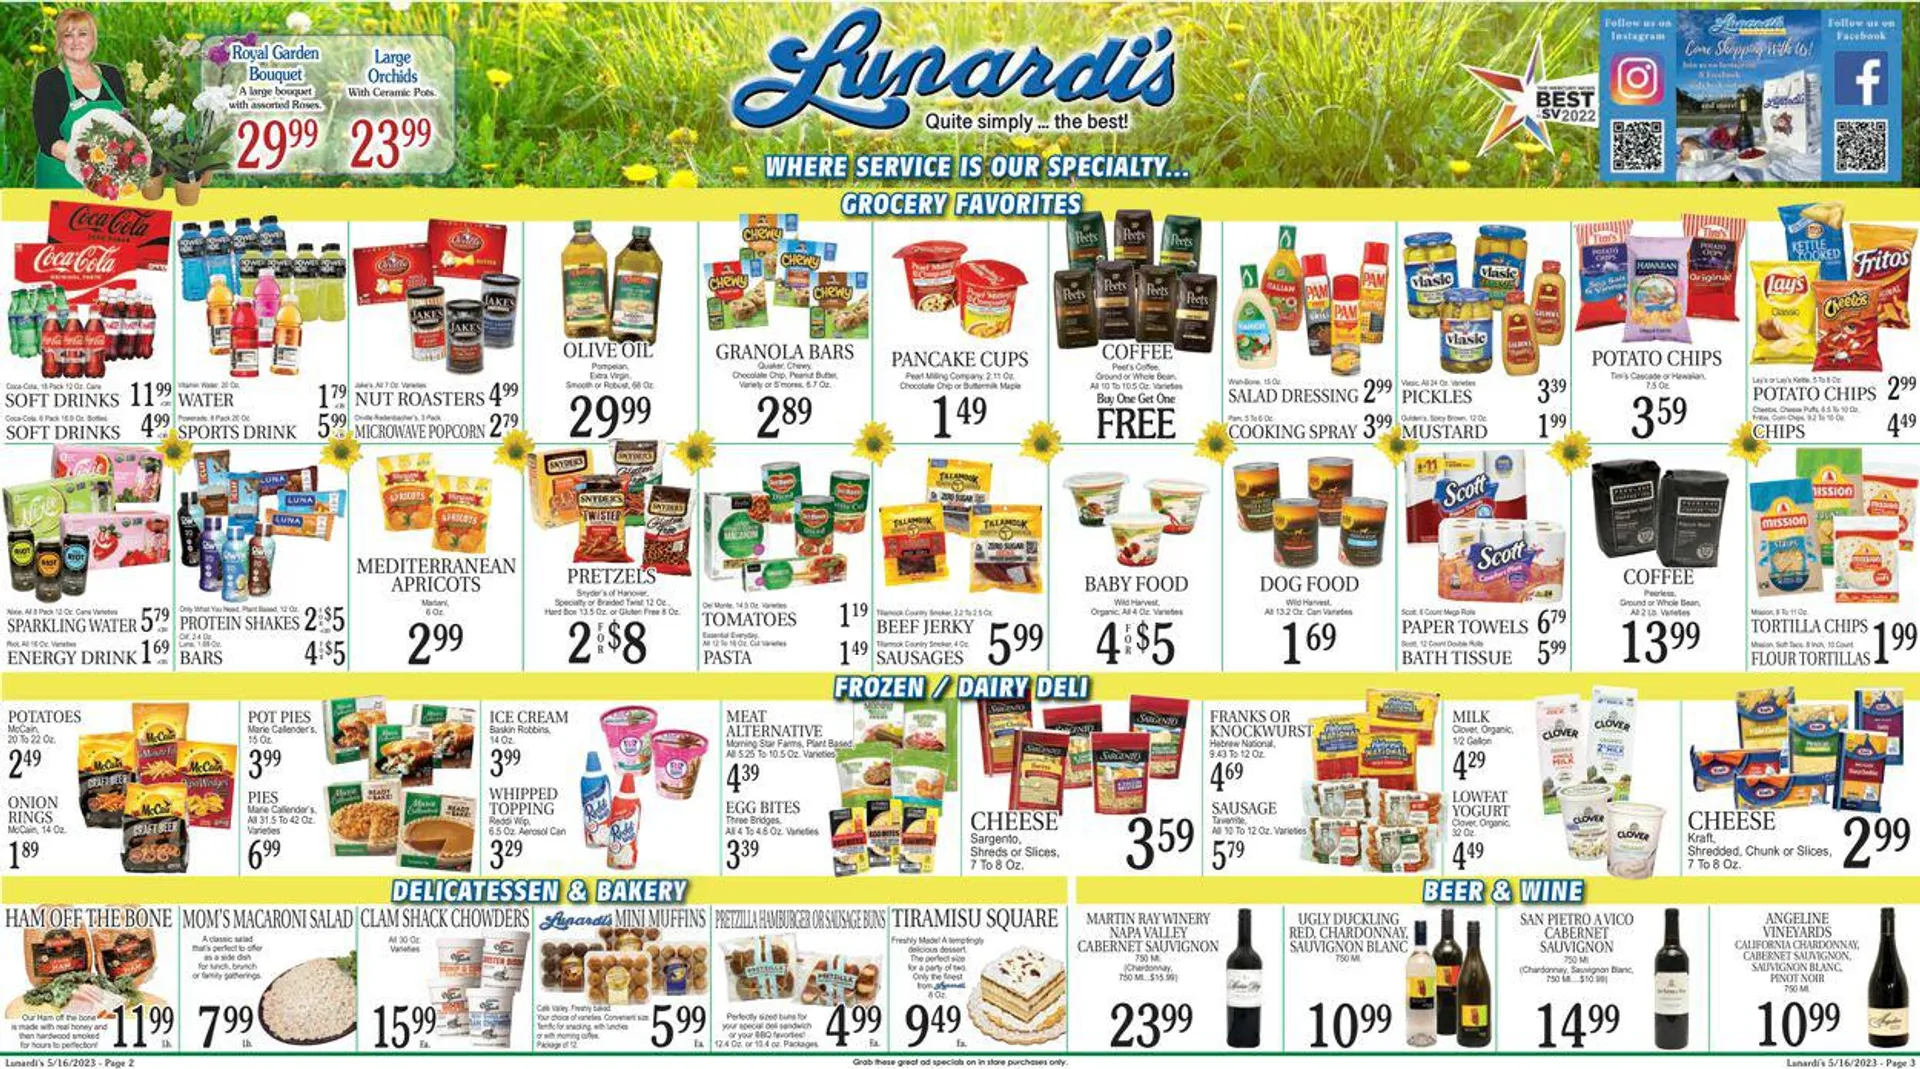 Lunardis Current weekly ad - 2